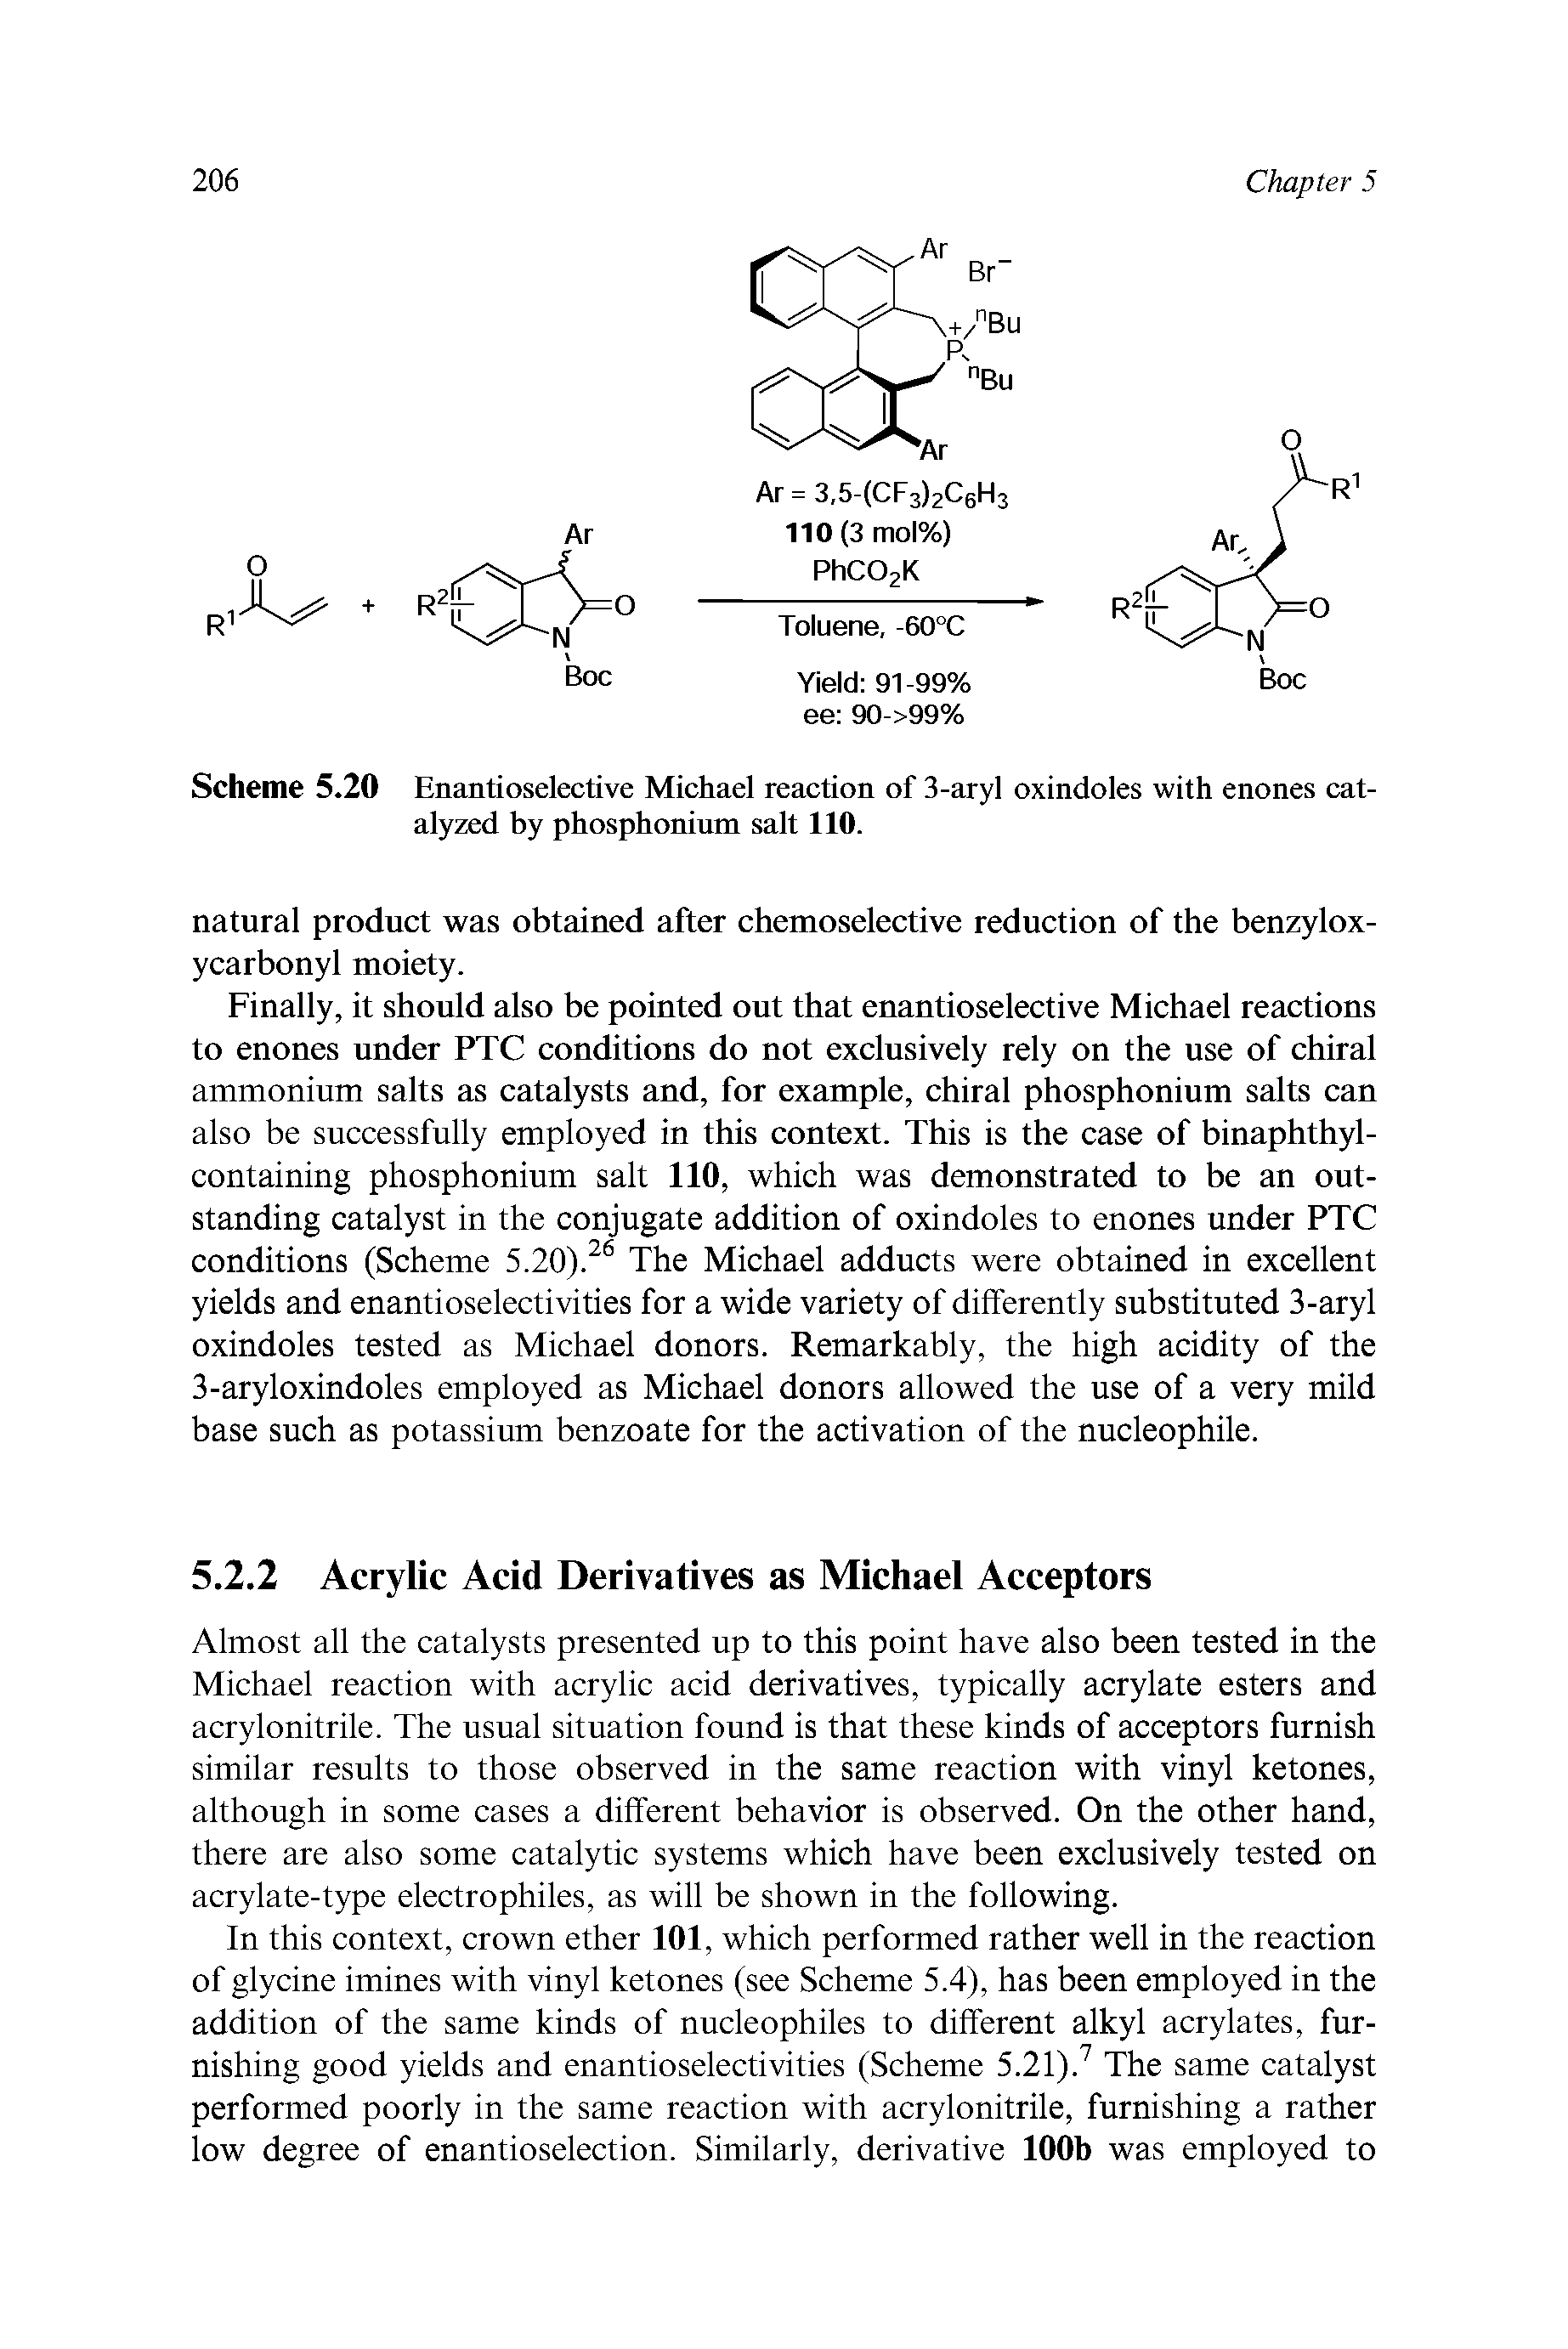 Scheme 5.20 Enantioselective Michael reaction of 3-aryl oxindoles with enones catalyzed by phosphonium salt 110.